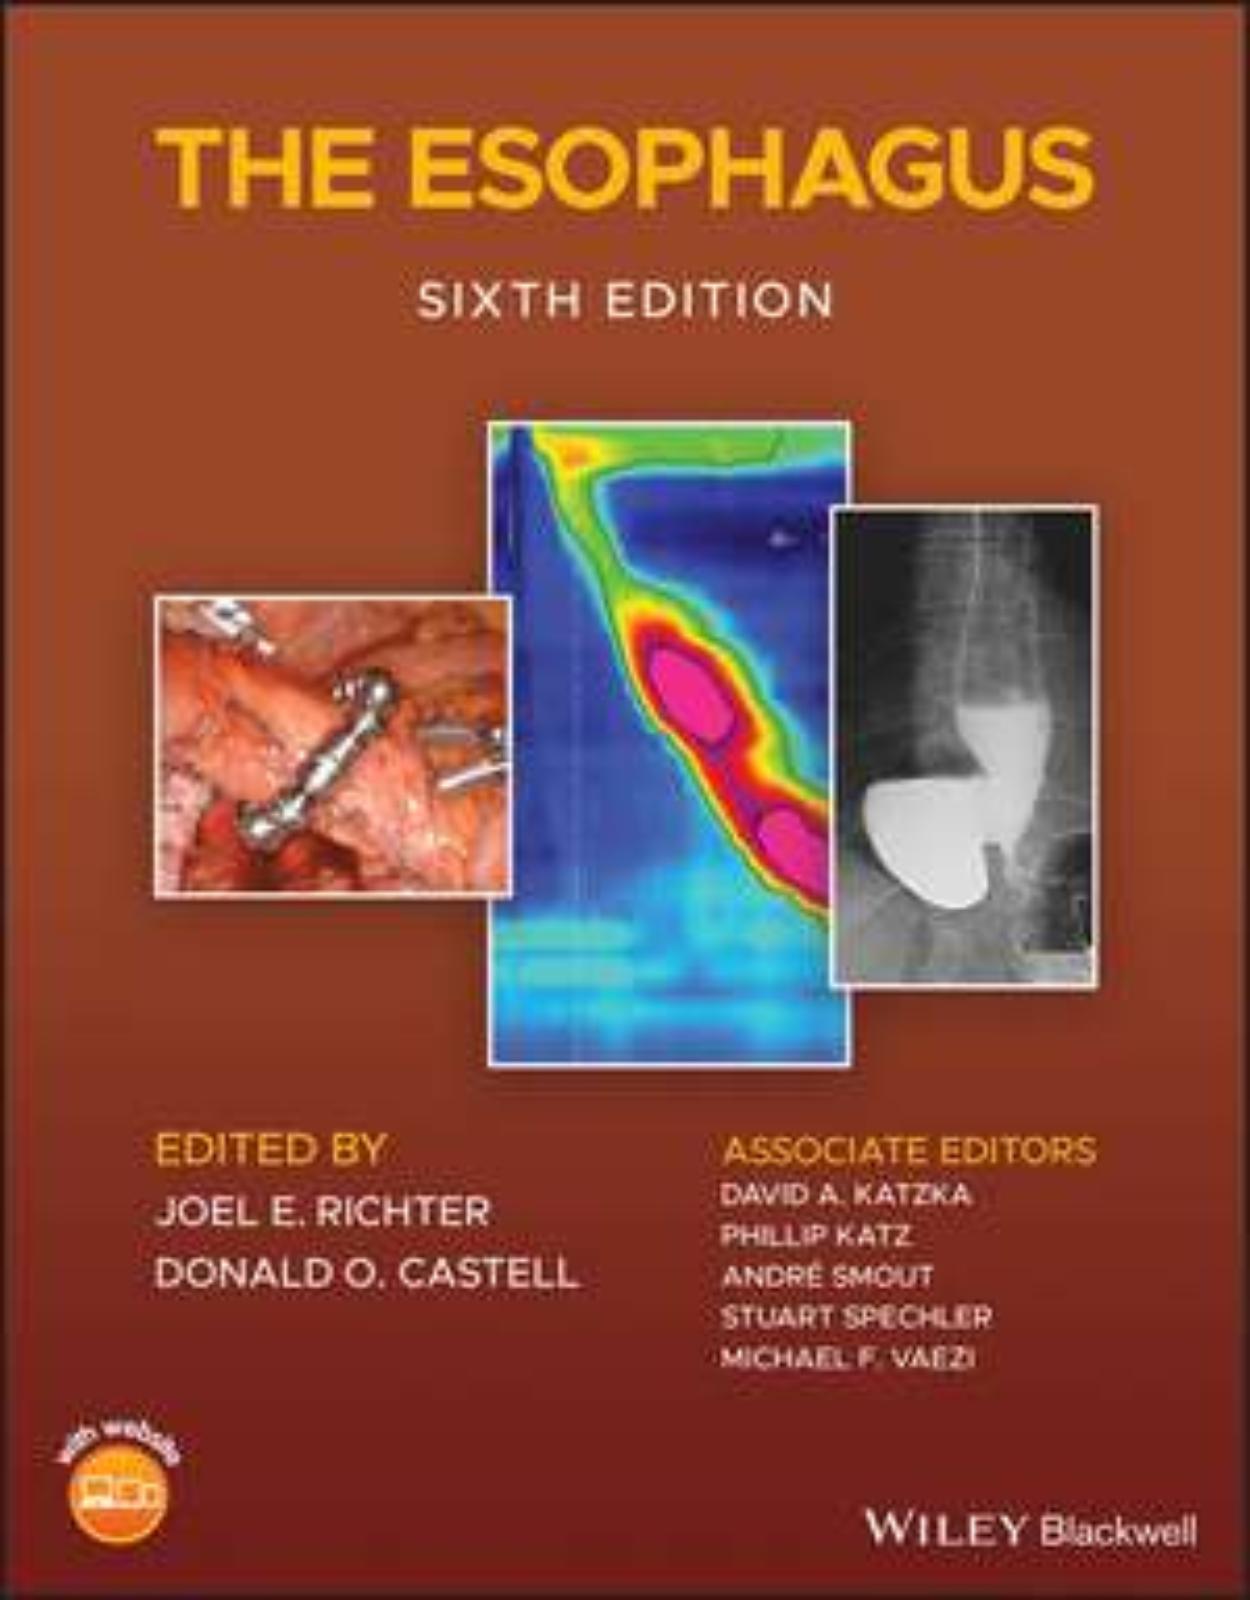 The Esophagus, 6th Edition